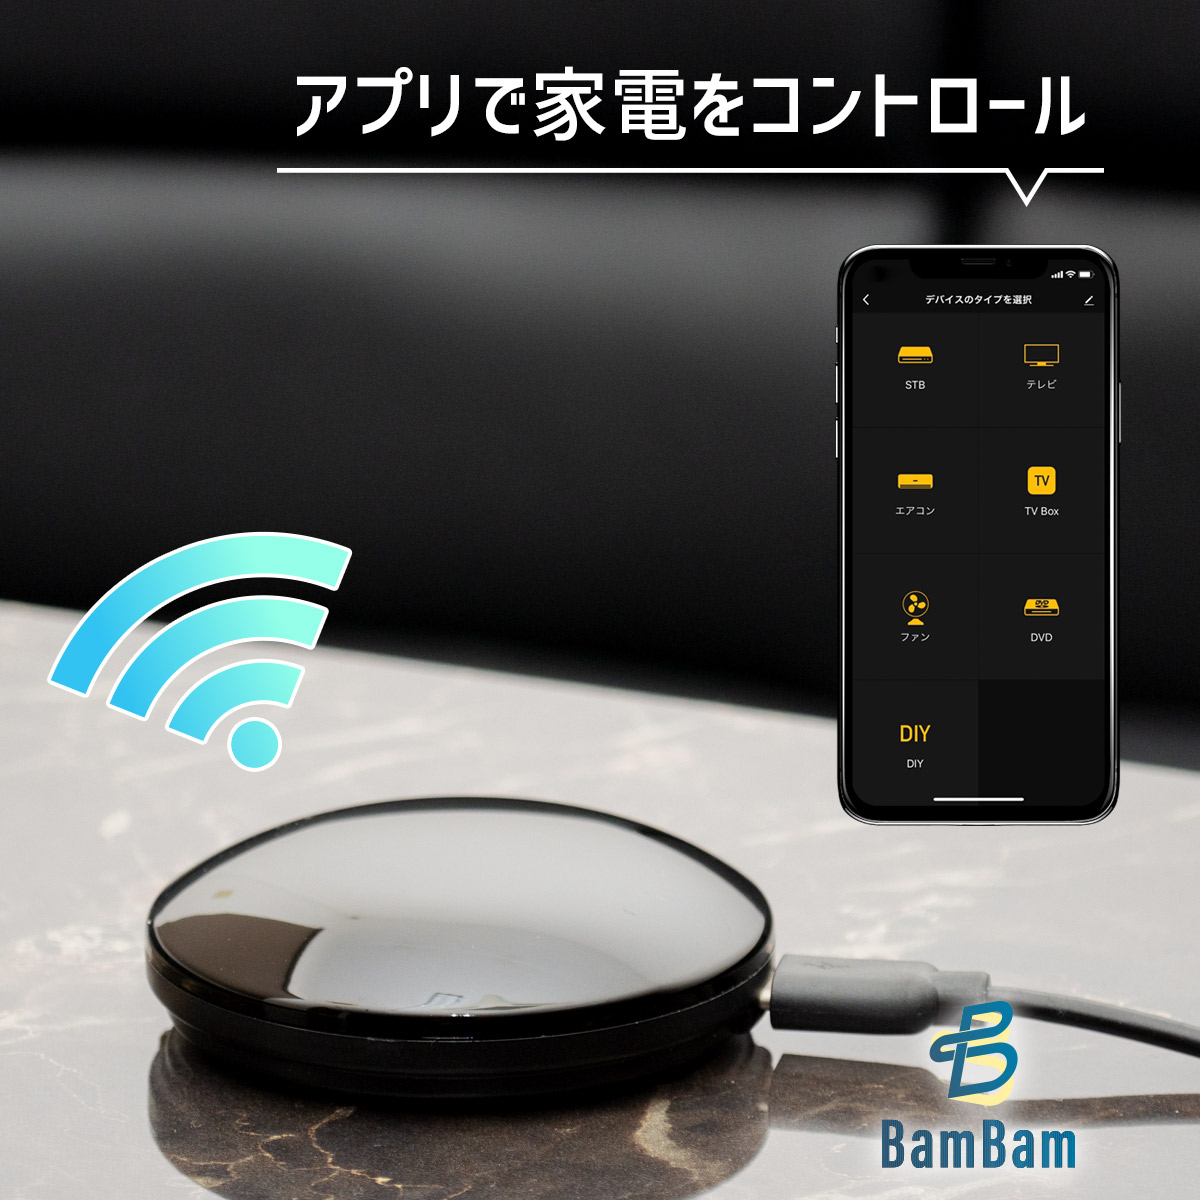 [BamBam] スマートリモコン Alexa 対応 スマホや声で家電を操作